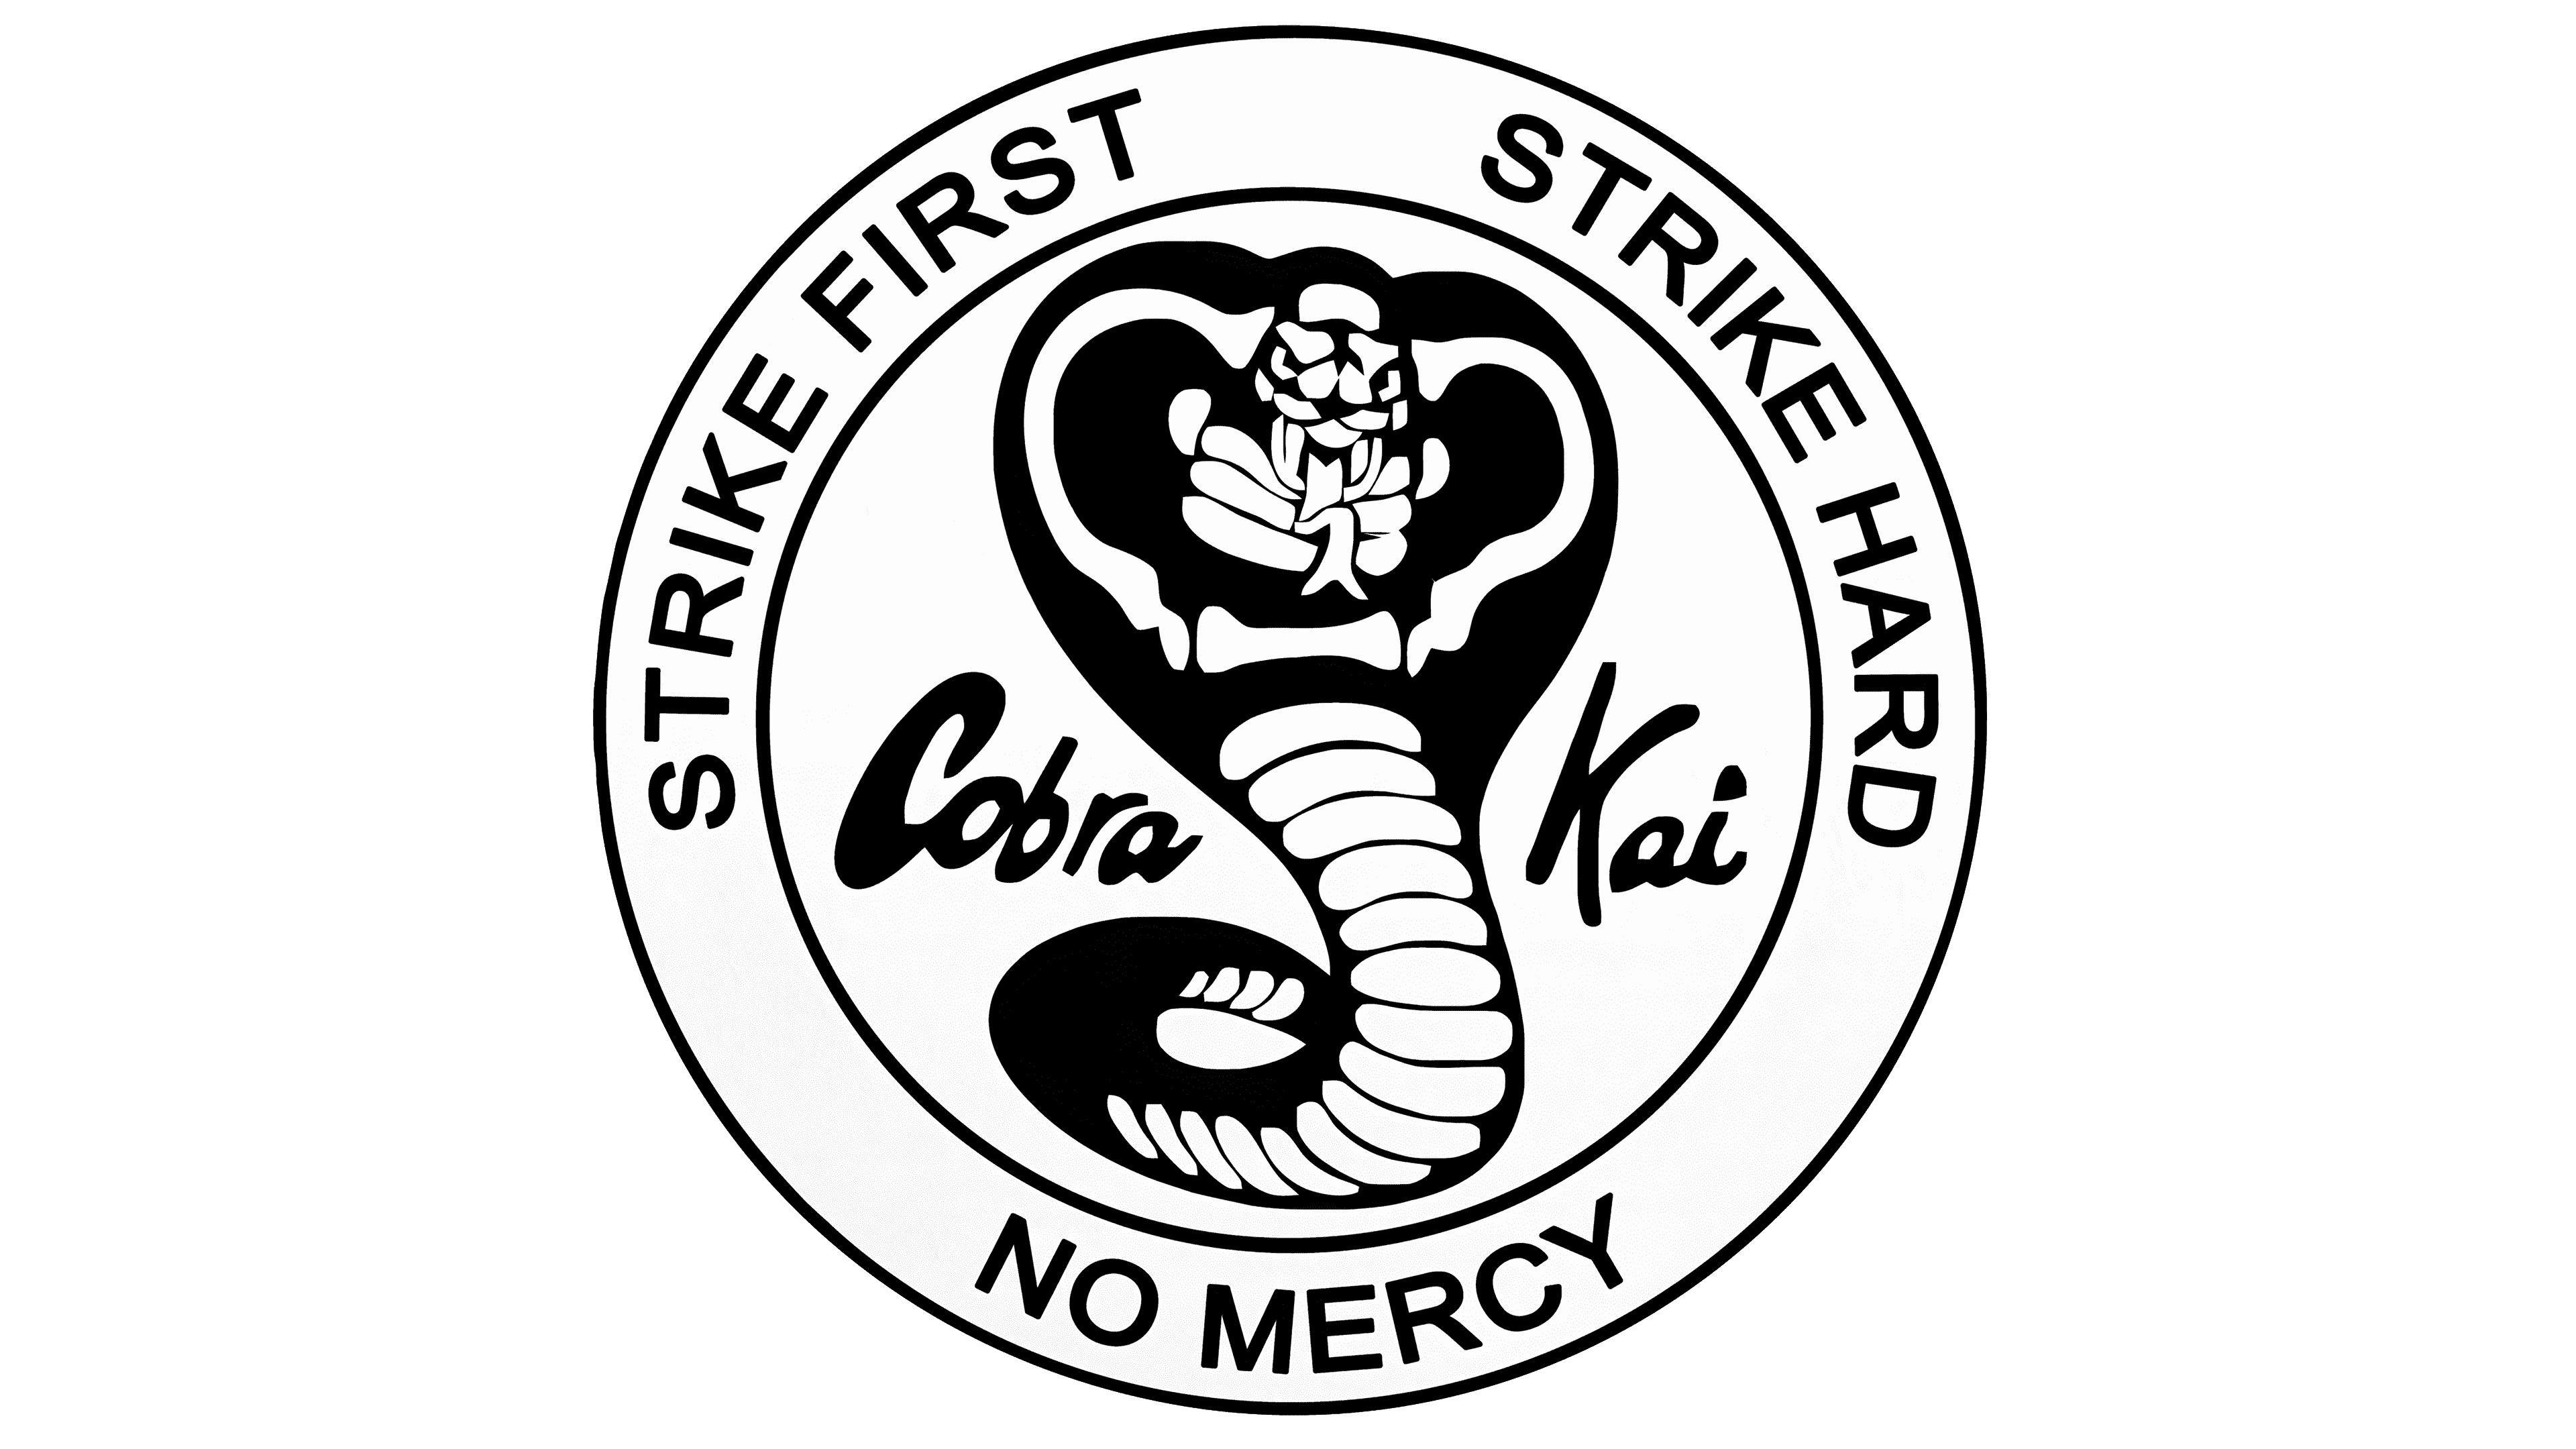 Cobra Kai Logo and symbol, meaning, history, PNG